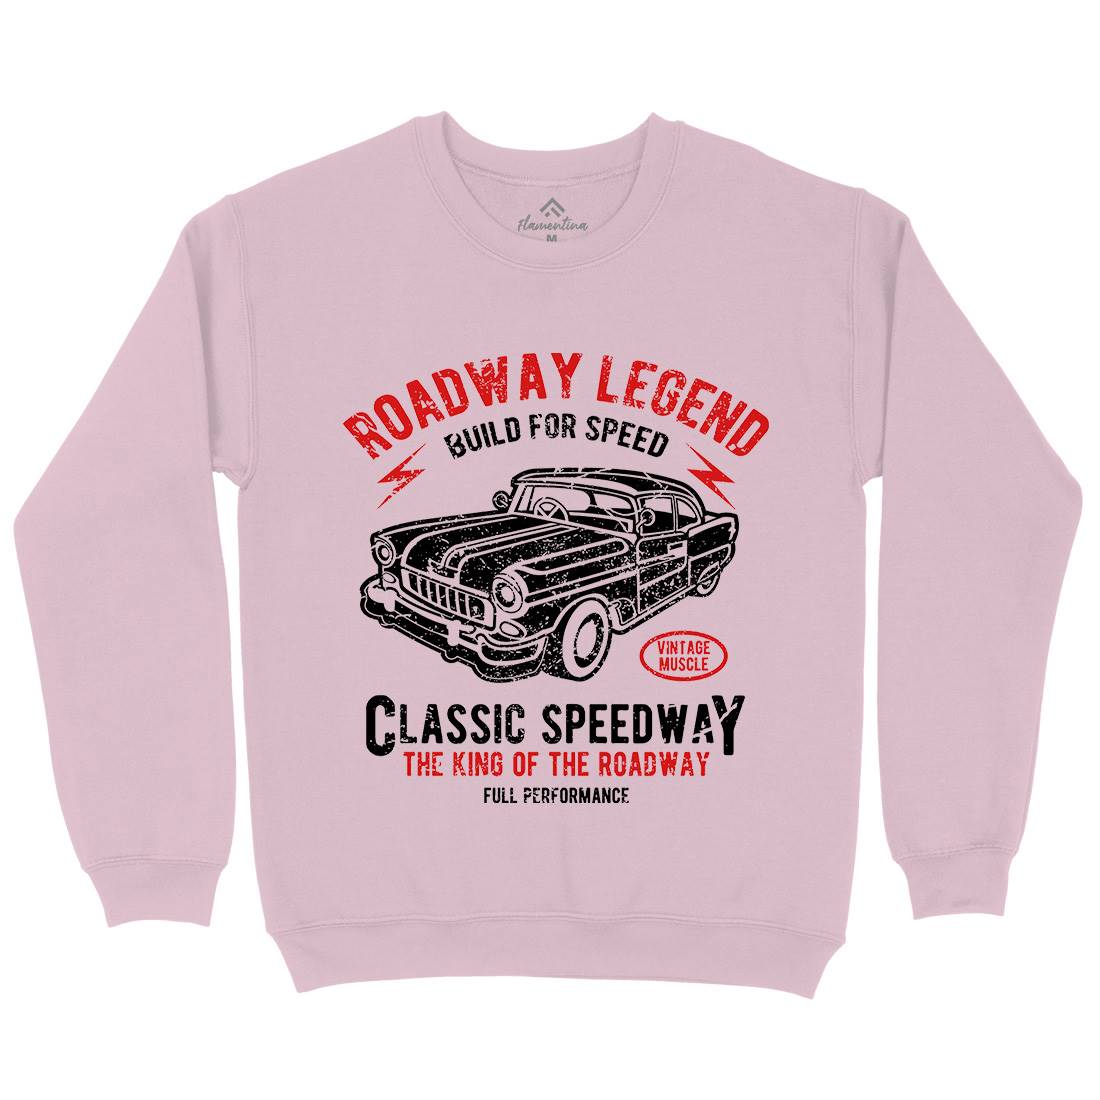 Roadway Legend Kids Crew Neck Sweatshirt Cars A124